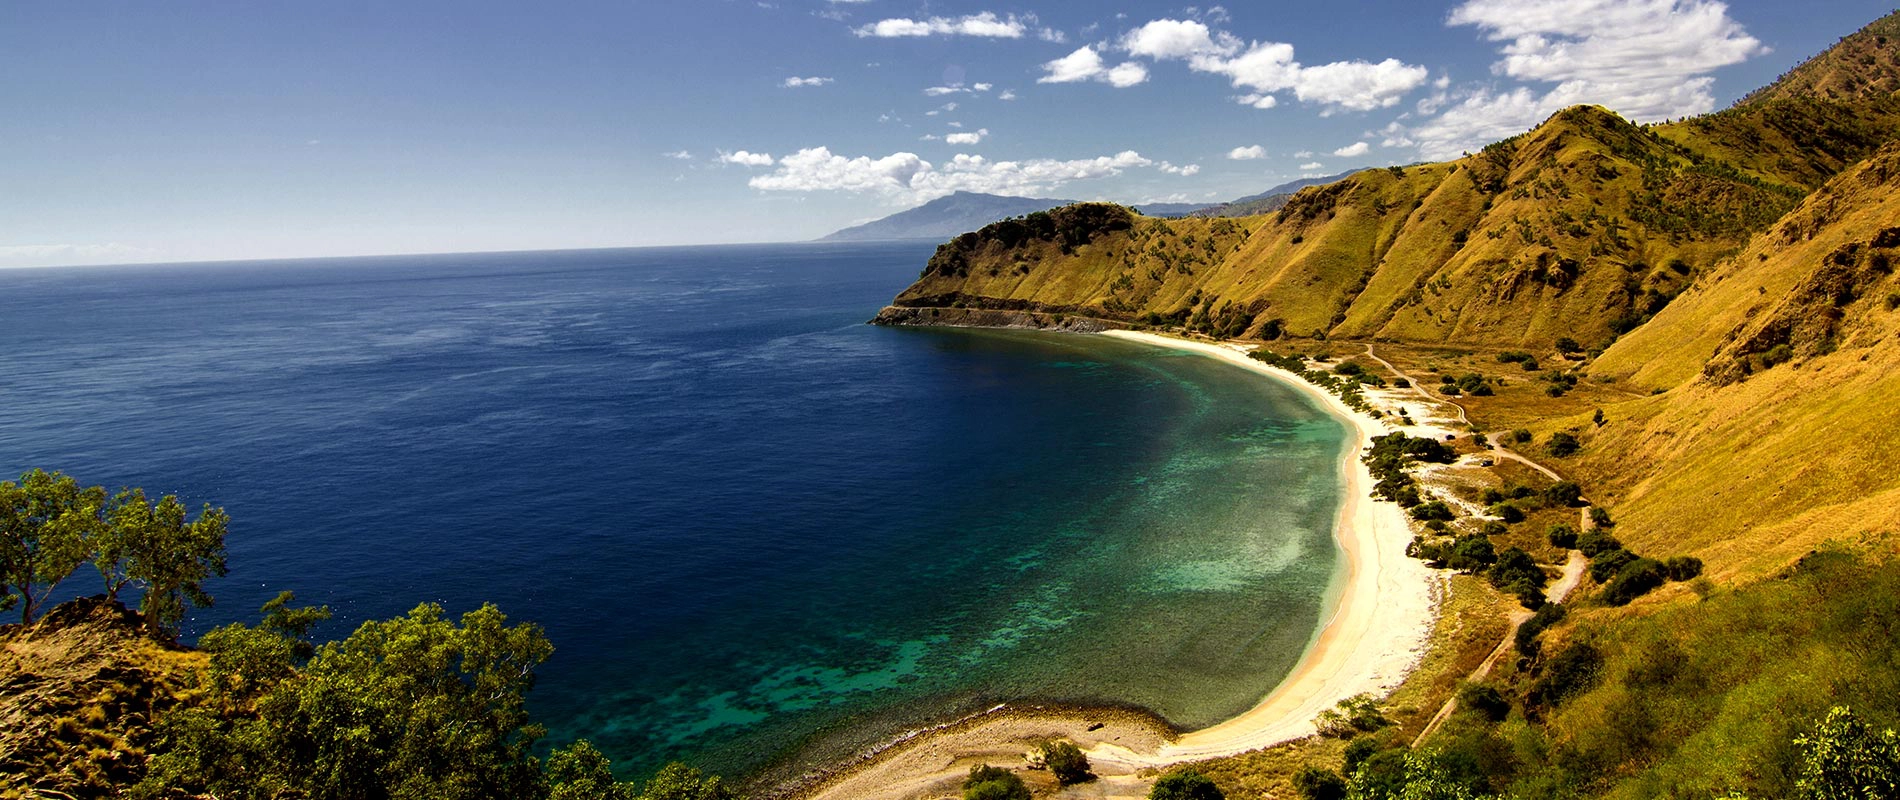  Atauro Island  strand - Kelet-Timor